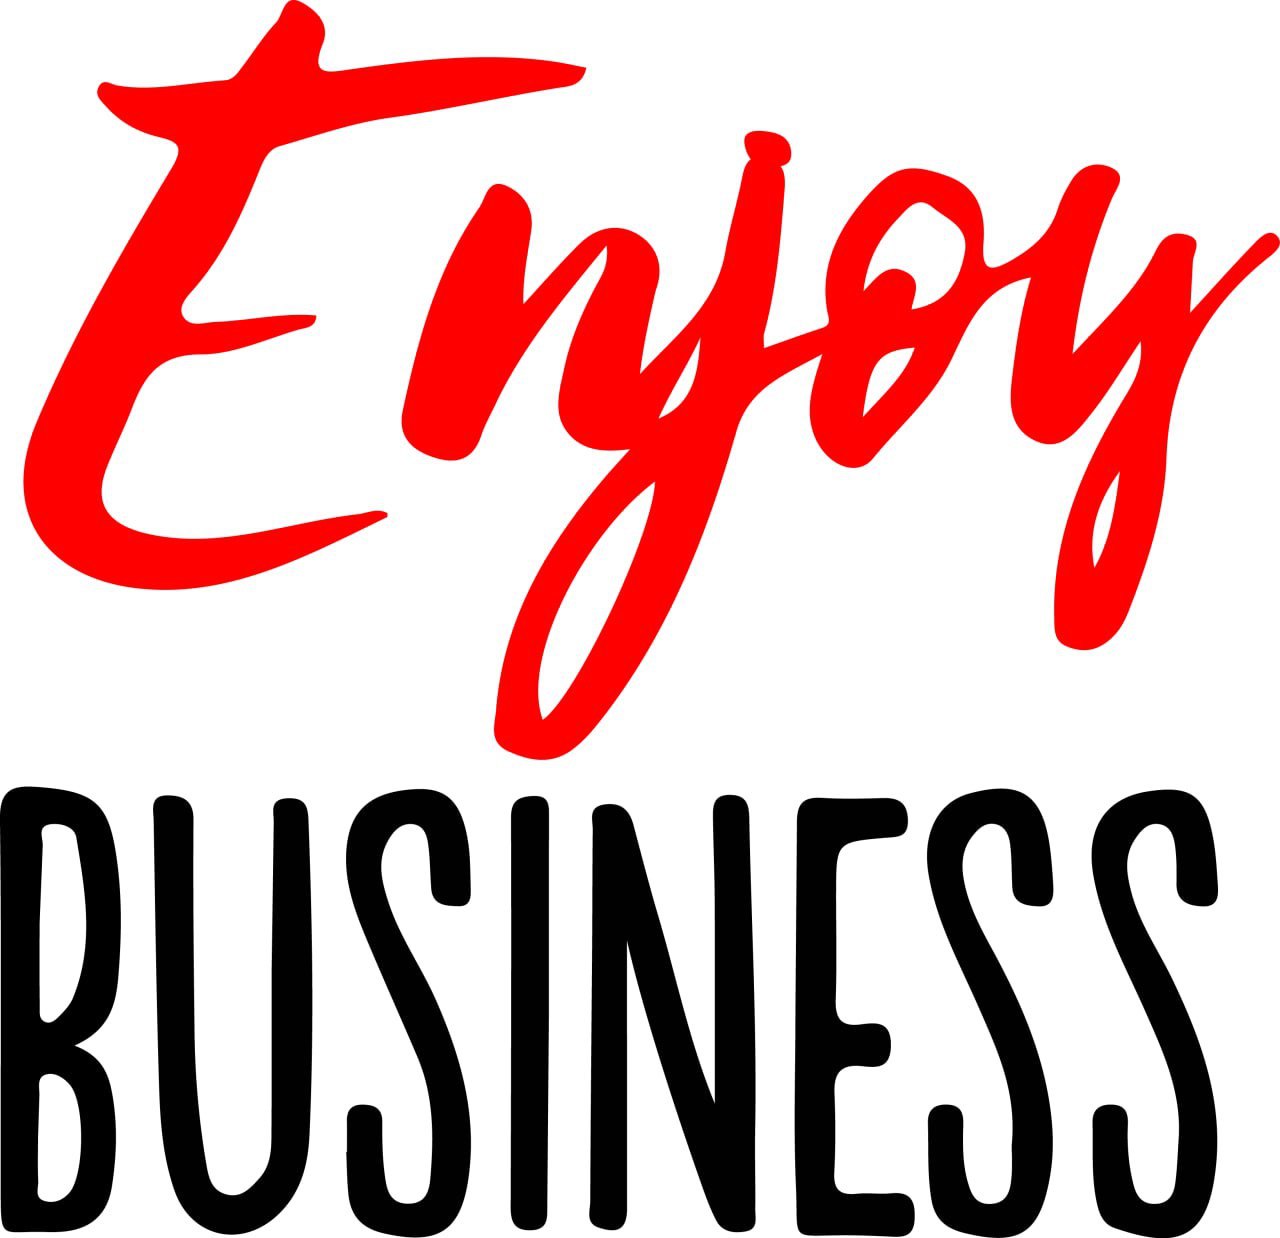 ENJOY BUSINESS logo